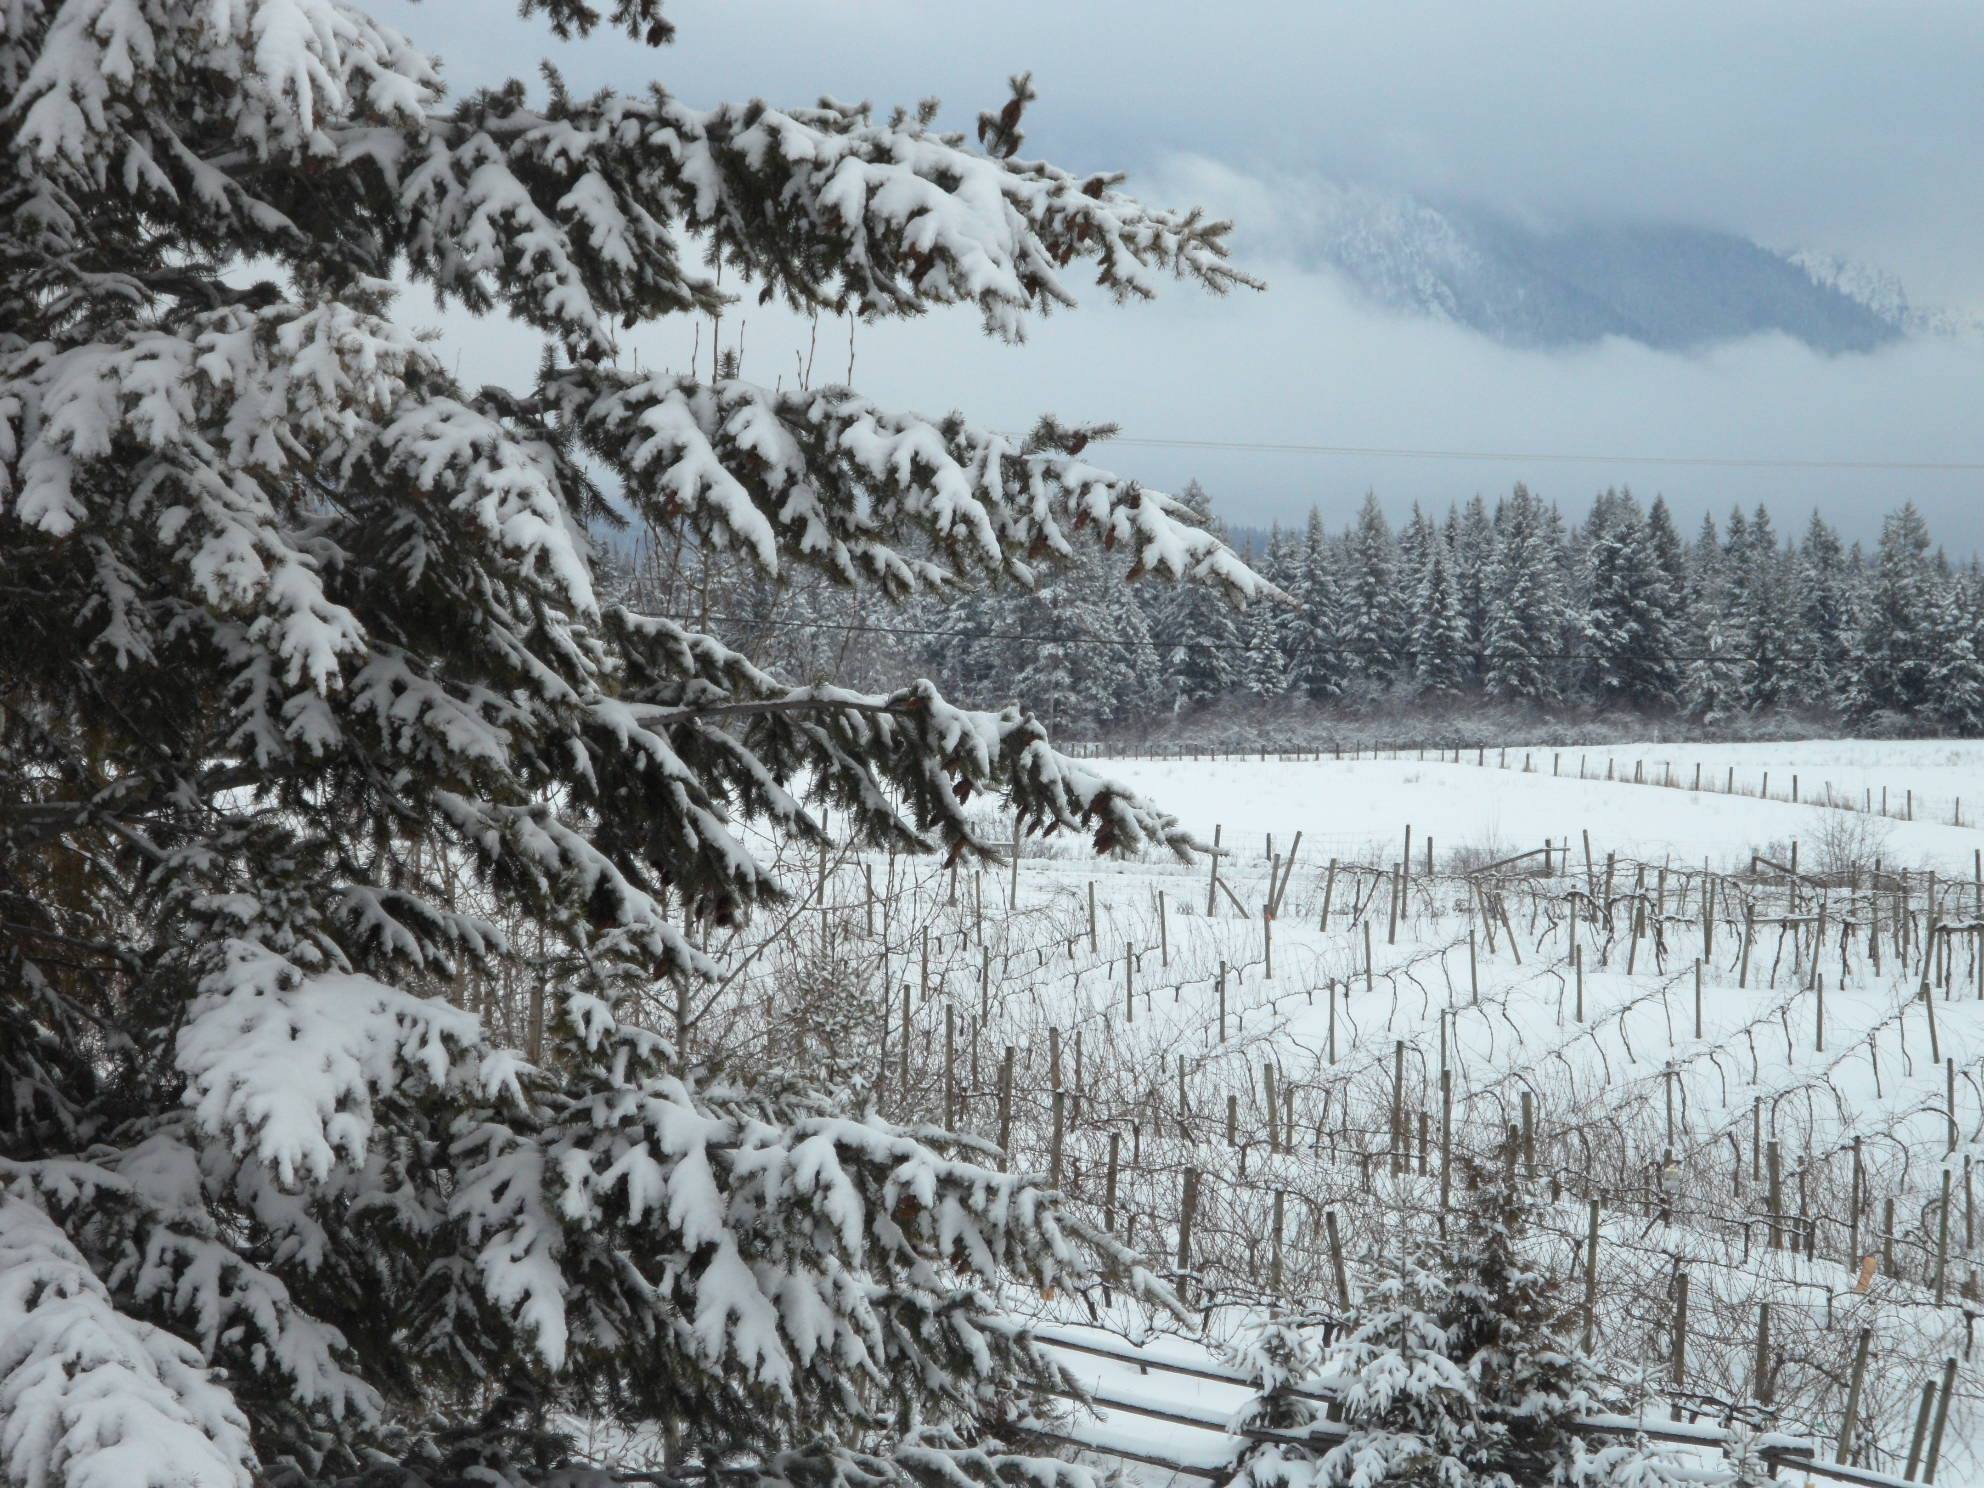 Recline Ridge Vineyard in winter